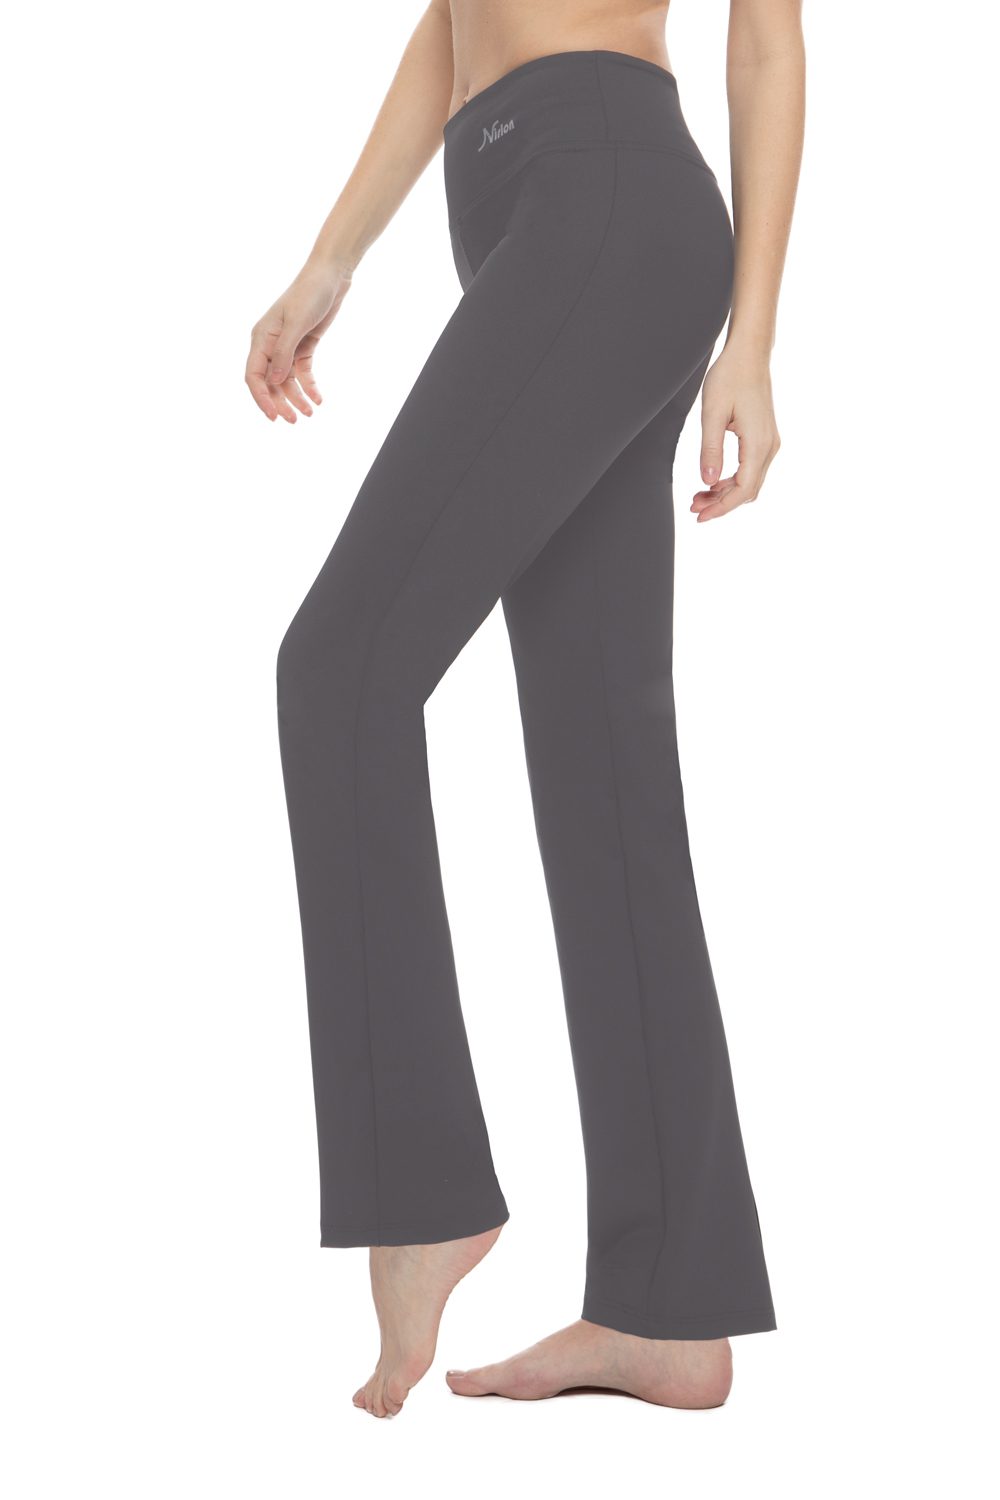 Nirlon Straight Leg Yoga Pants - Yoga Pants for Women Soft & Breathable  Womens Leggings for Gym & Yoga Regular & Plus Size